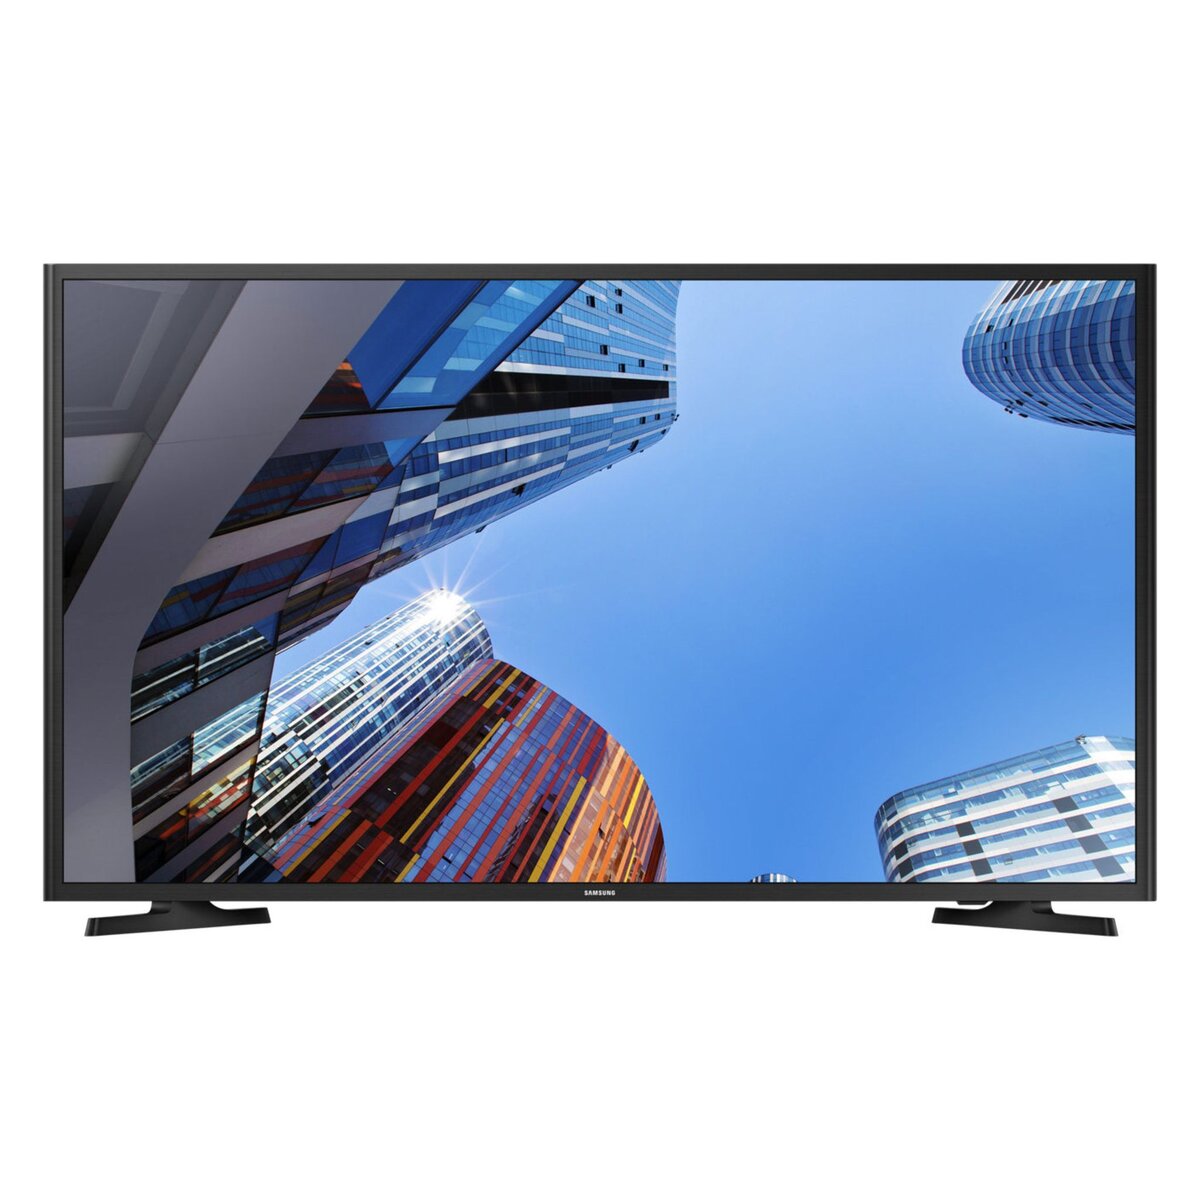 SAMSUNG UE40M5005 TV LED Full HD 100 cm